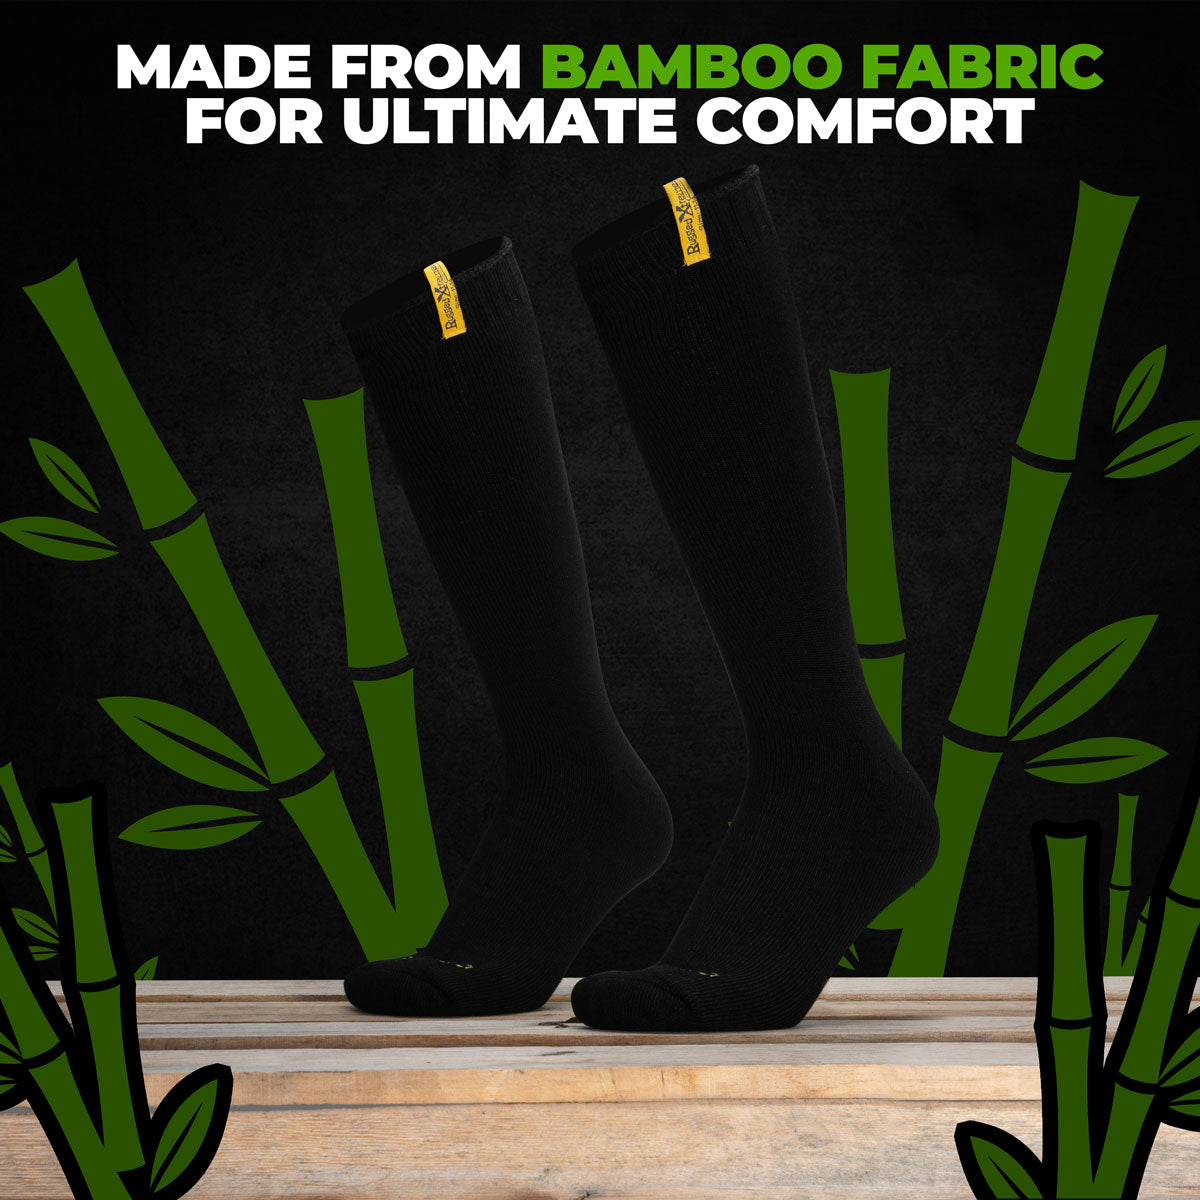 11-14 Bamboo Socks - 2x Pair Pack